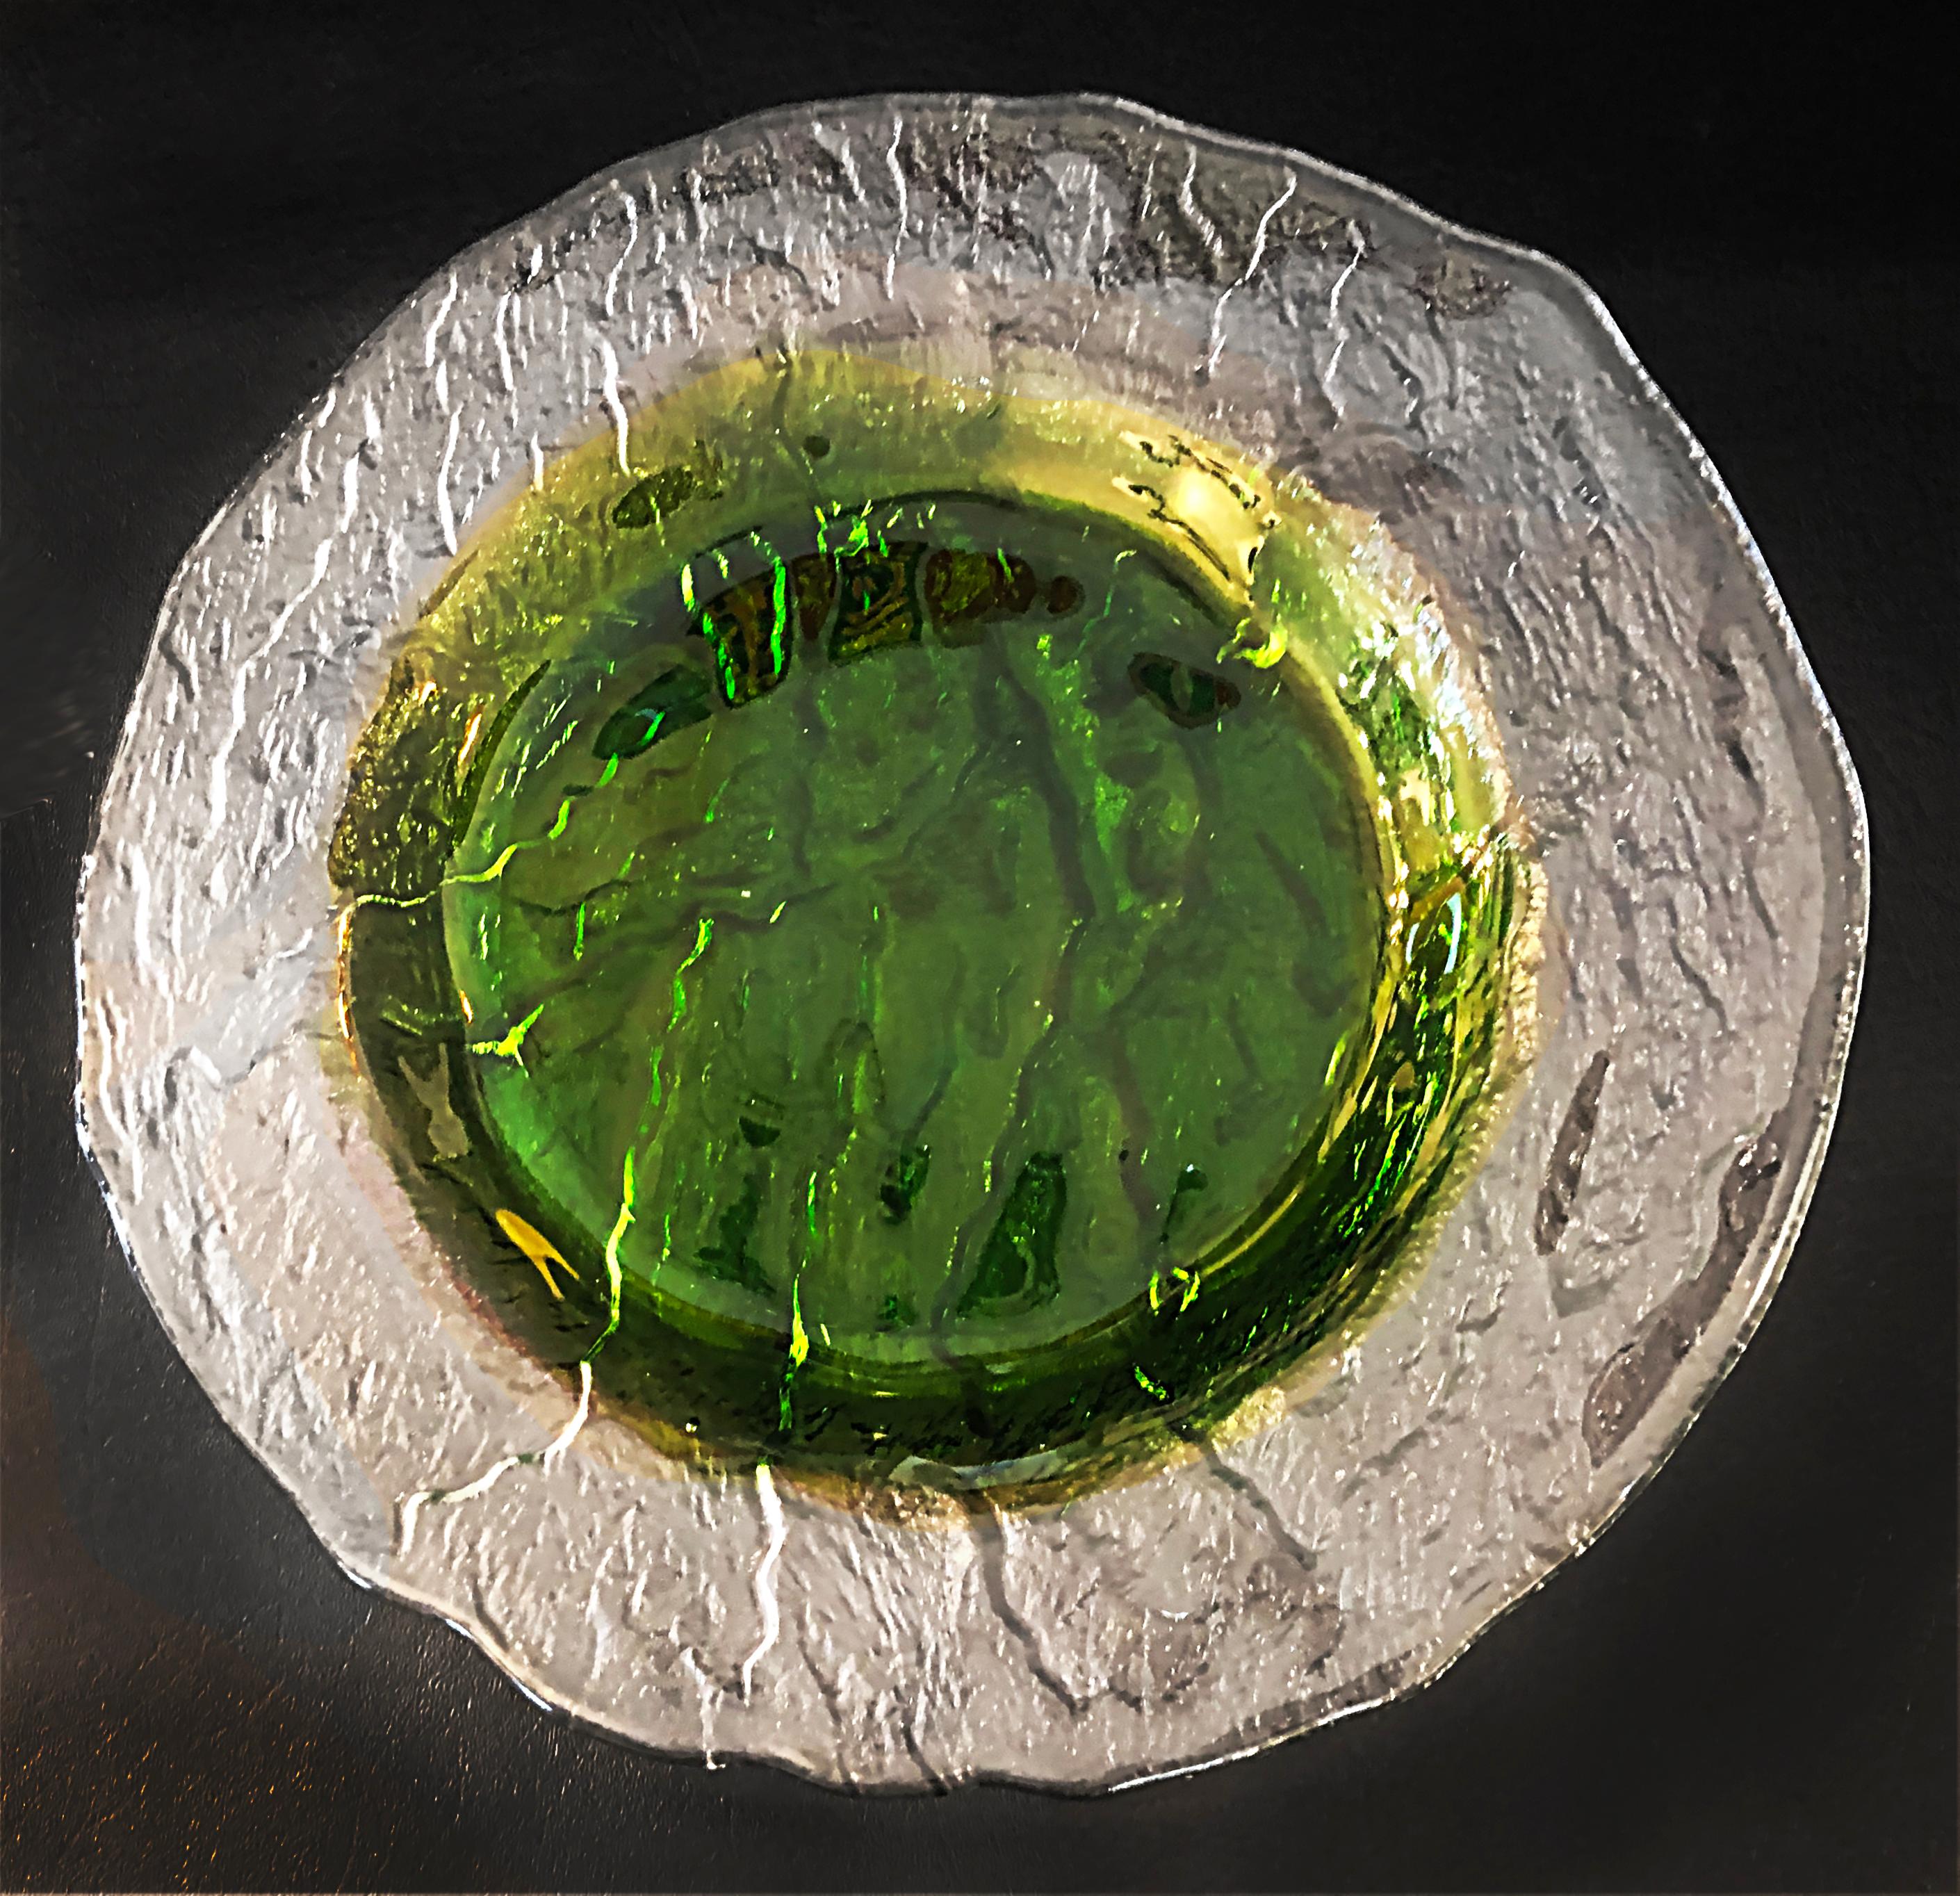 1970s textured glass Pertti Santalahti Humppila Kivi Plates, Set of 12

Offered for sale is a set of twelve (12) ice-like textured glass 